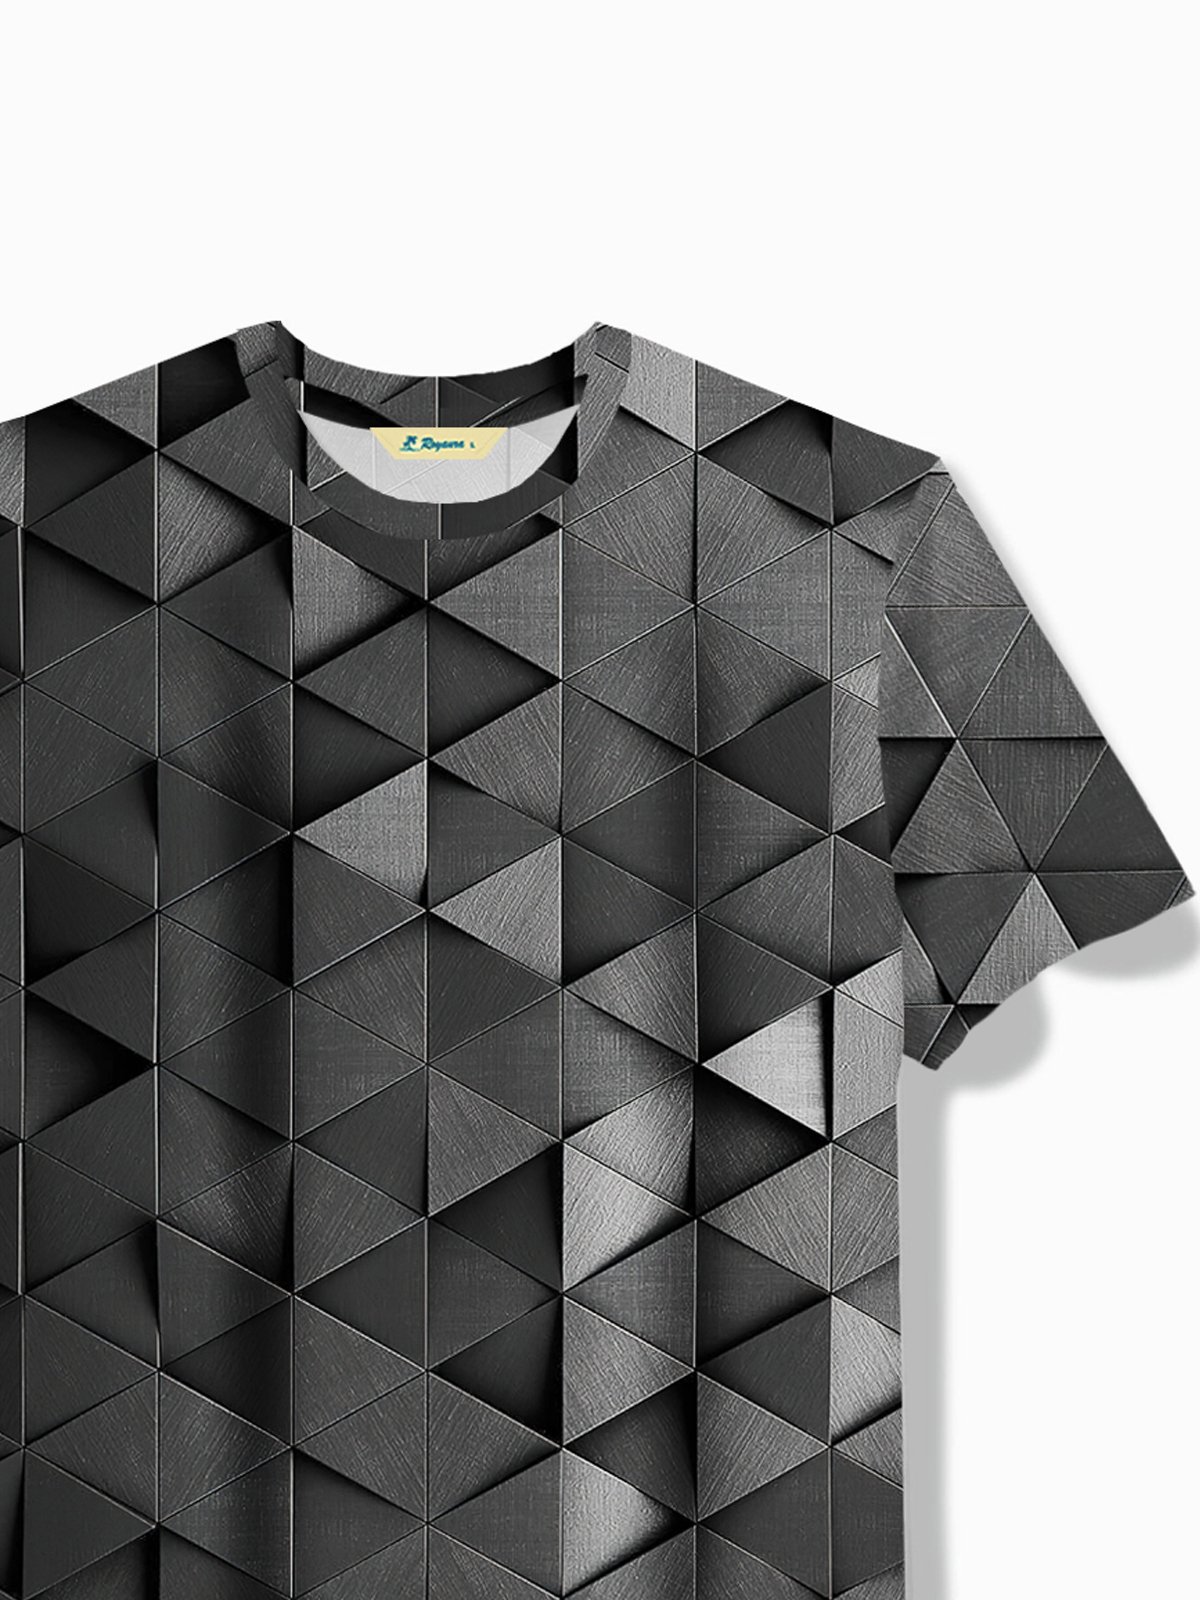 Royaura® Retro Geometric 3D Print Men's Short Sleeve T-Shirt